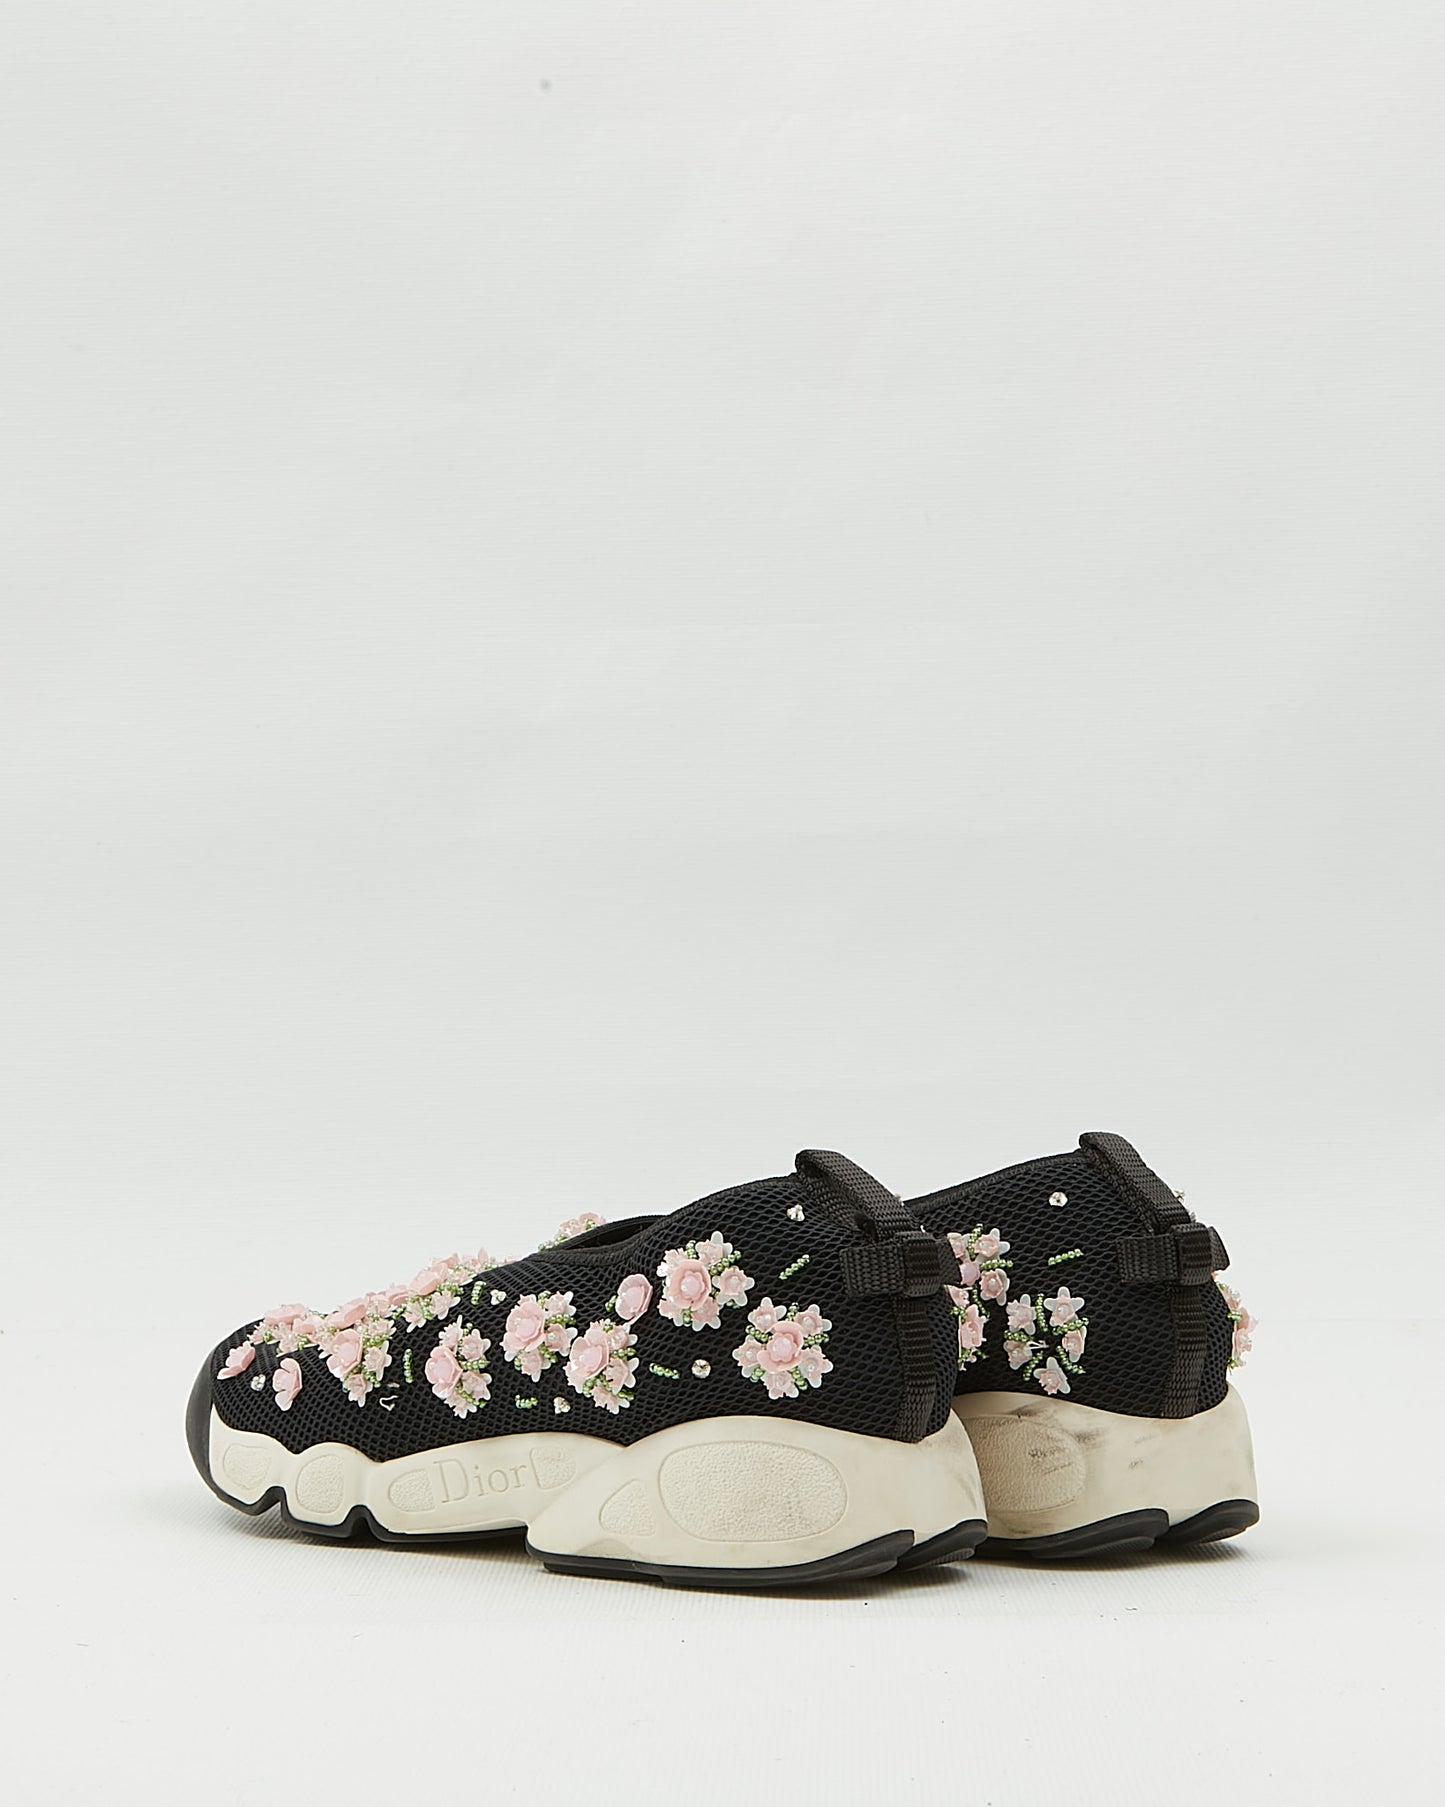 Dior Black/Pink Crystal Embellished Mesh Fusion Sneakers Sneakers - 37.5